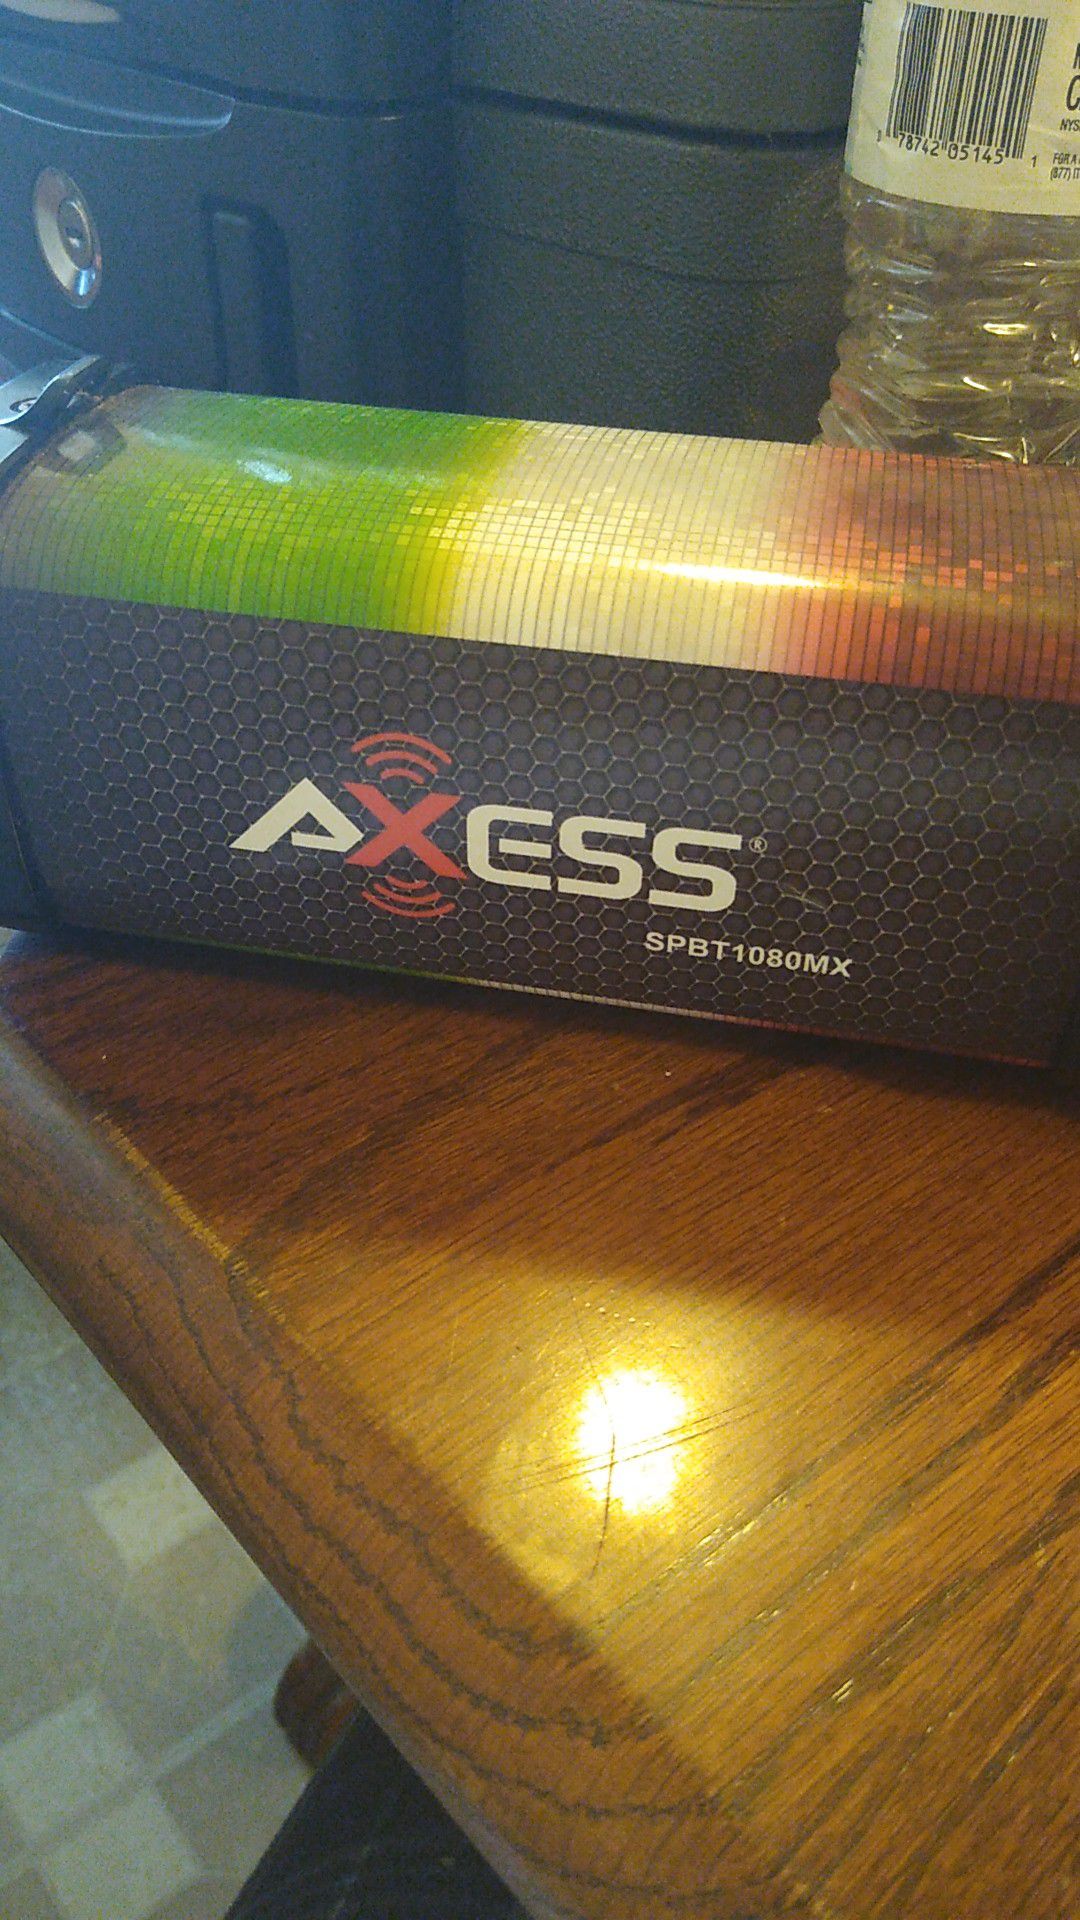 Axcess Bluetooth Speaker